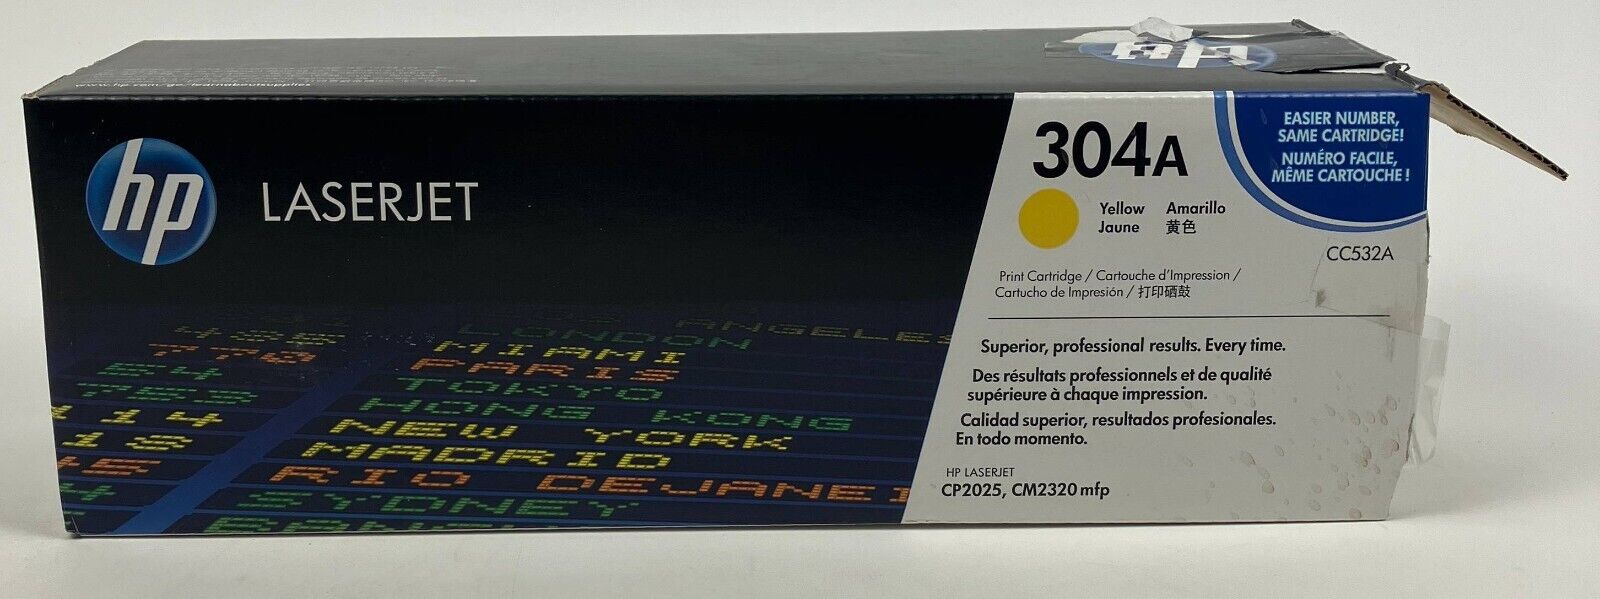 Genuine HP Laserjet 304A Yellow Laser Toner Print Cartridge CC532A NEW OPEN BOX